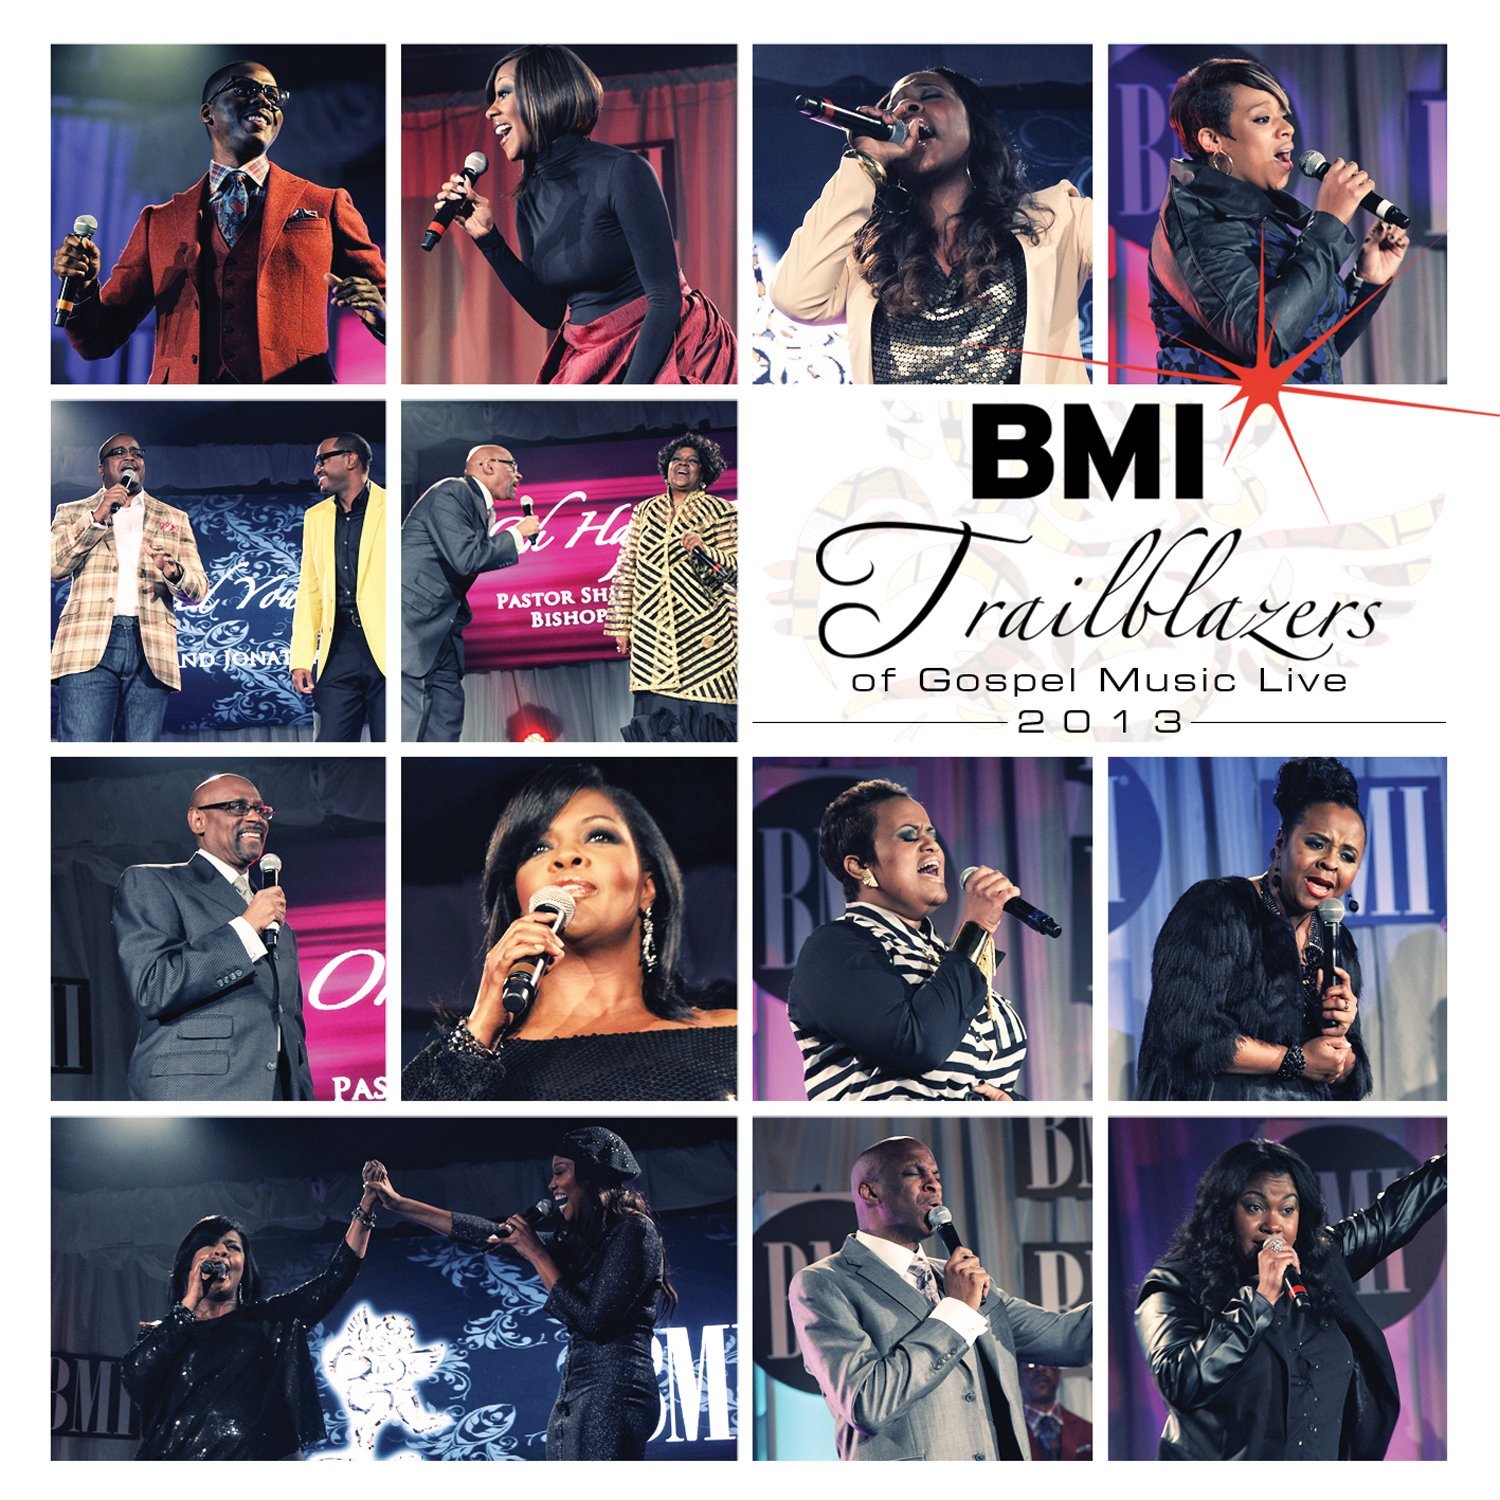 BMI Trailblazers of Gospel Music Live 2013 album